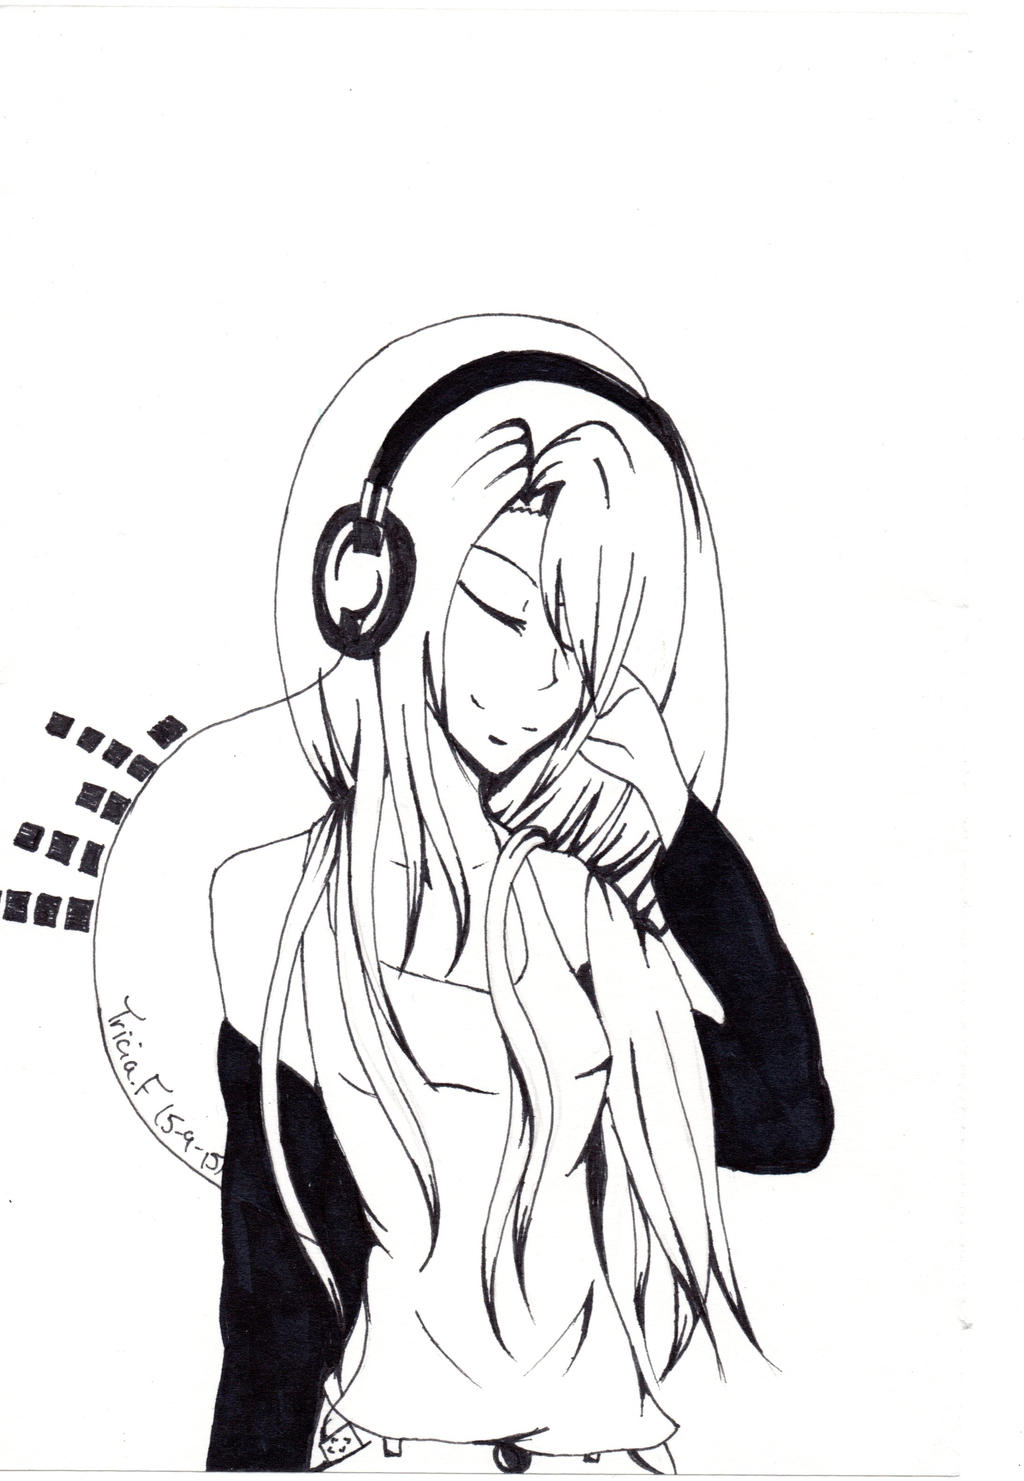 Headphone Anime Girl by TriciaCreations on DeviantArt